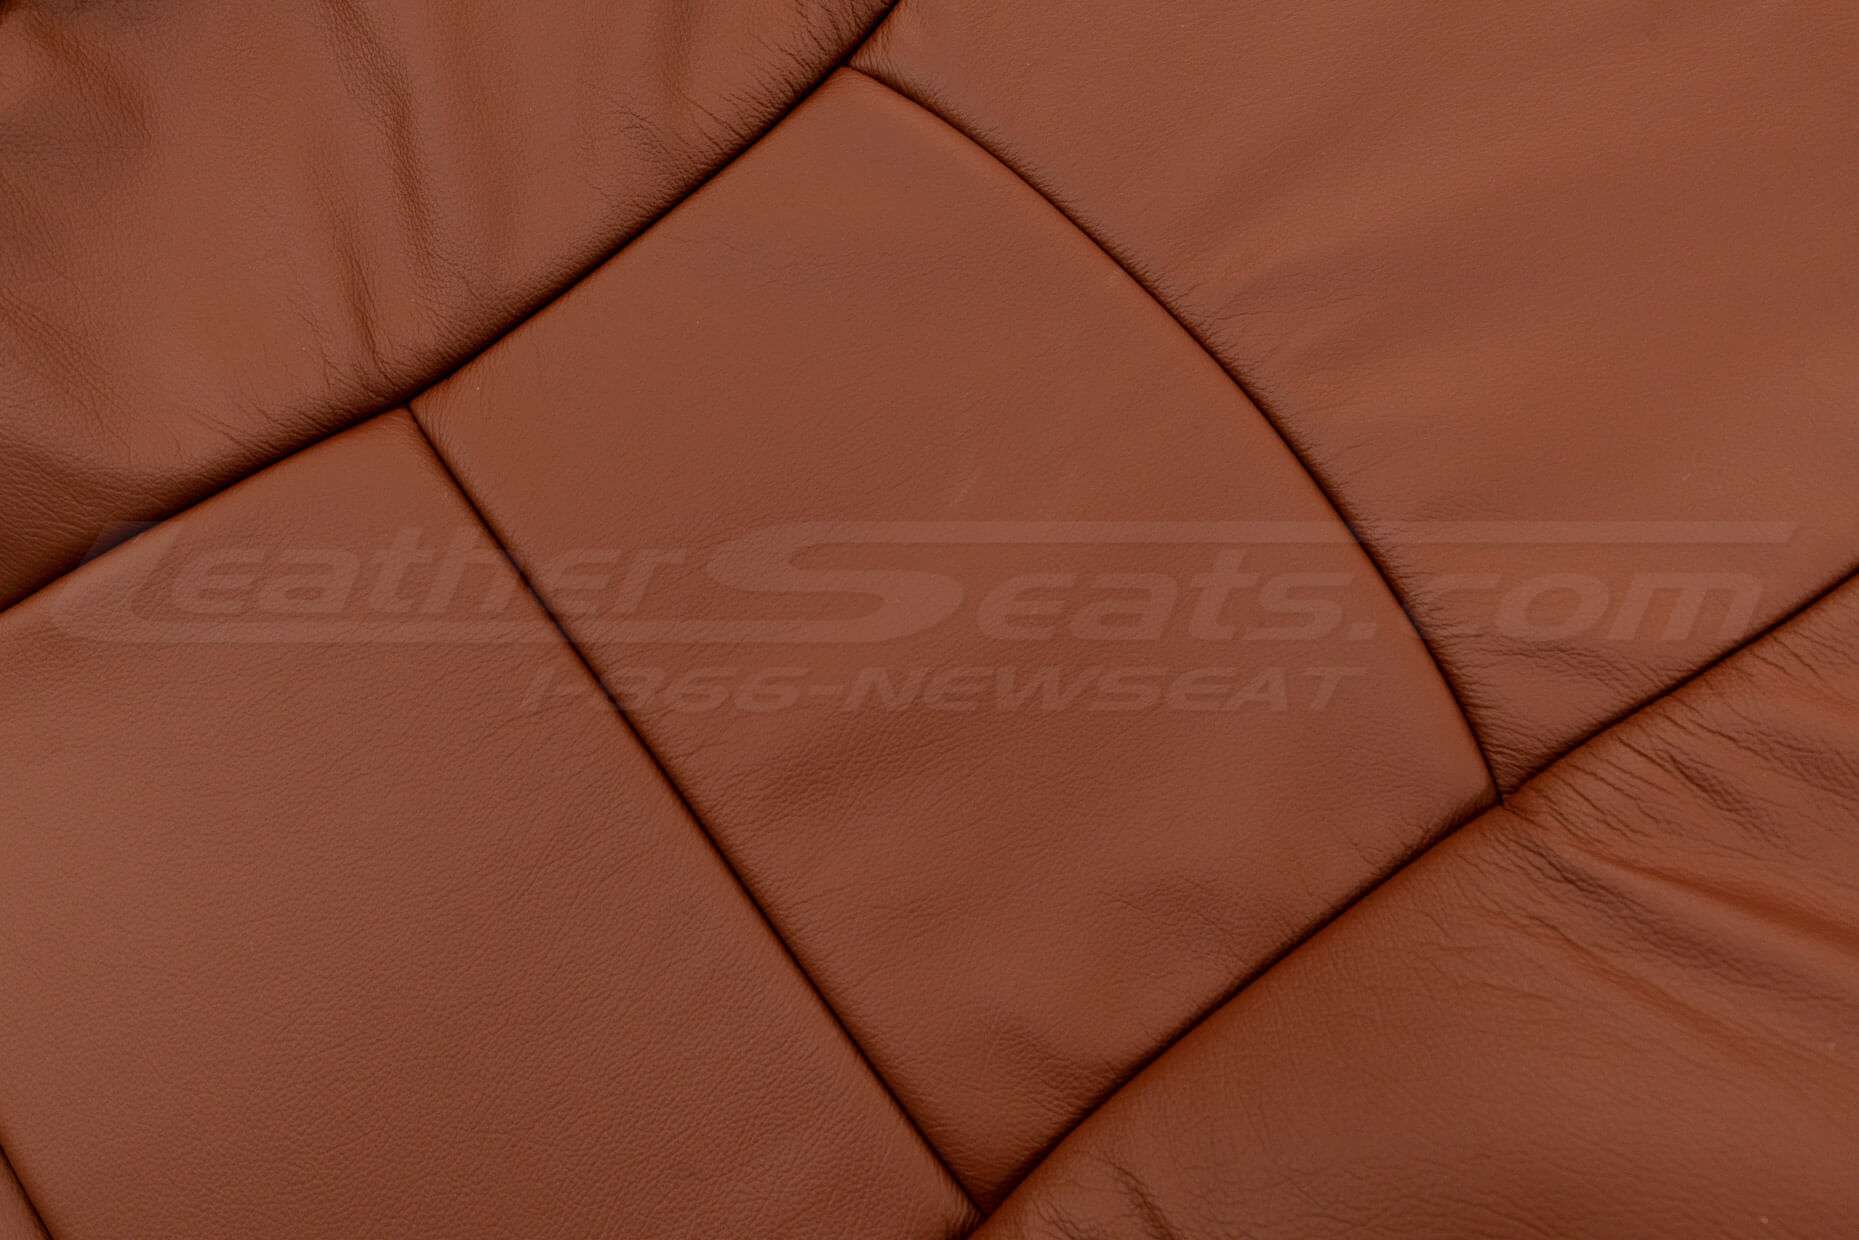 Mitt Brown leather texture on backrest